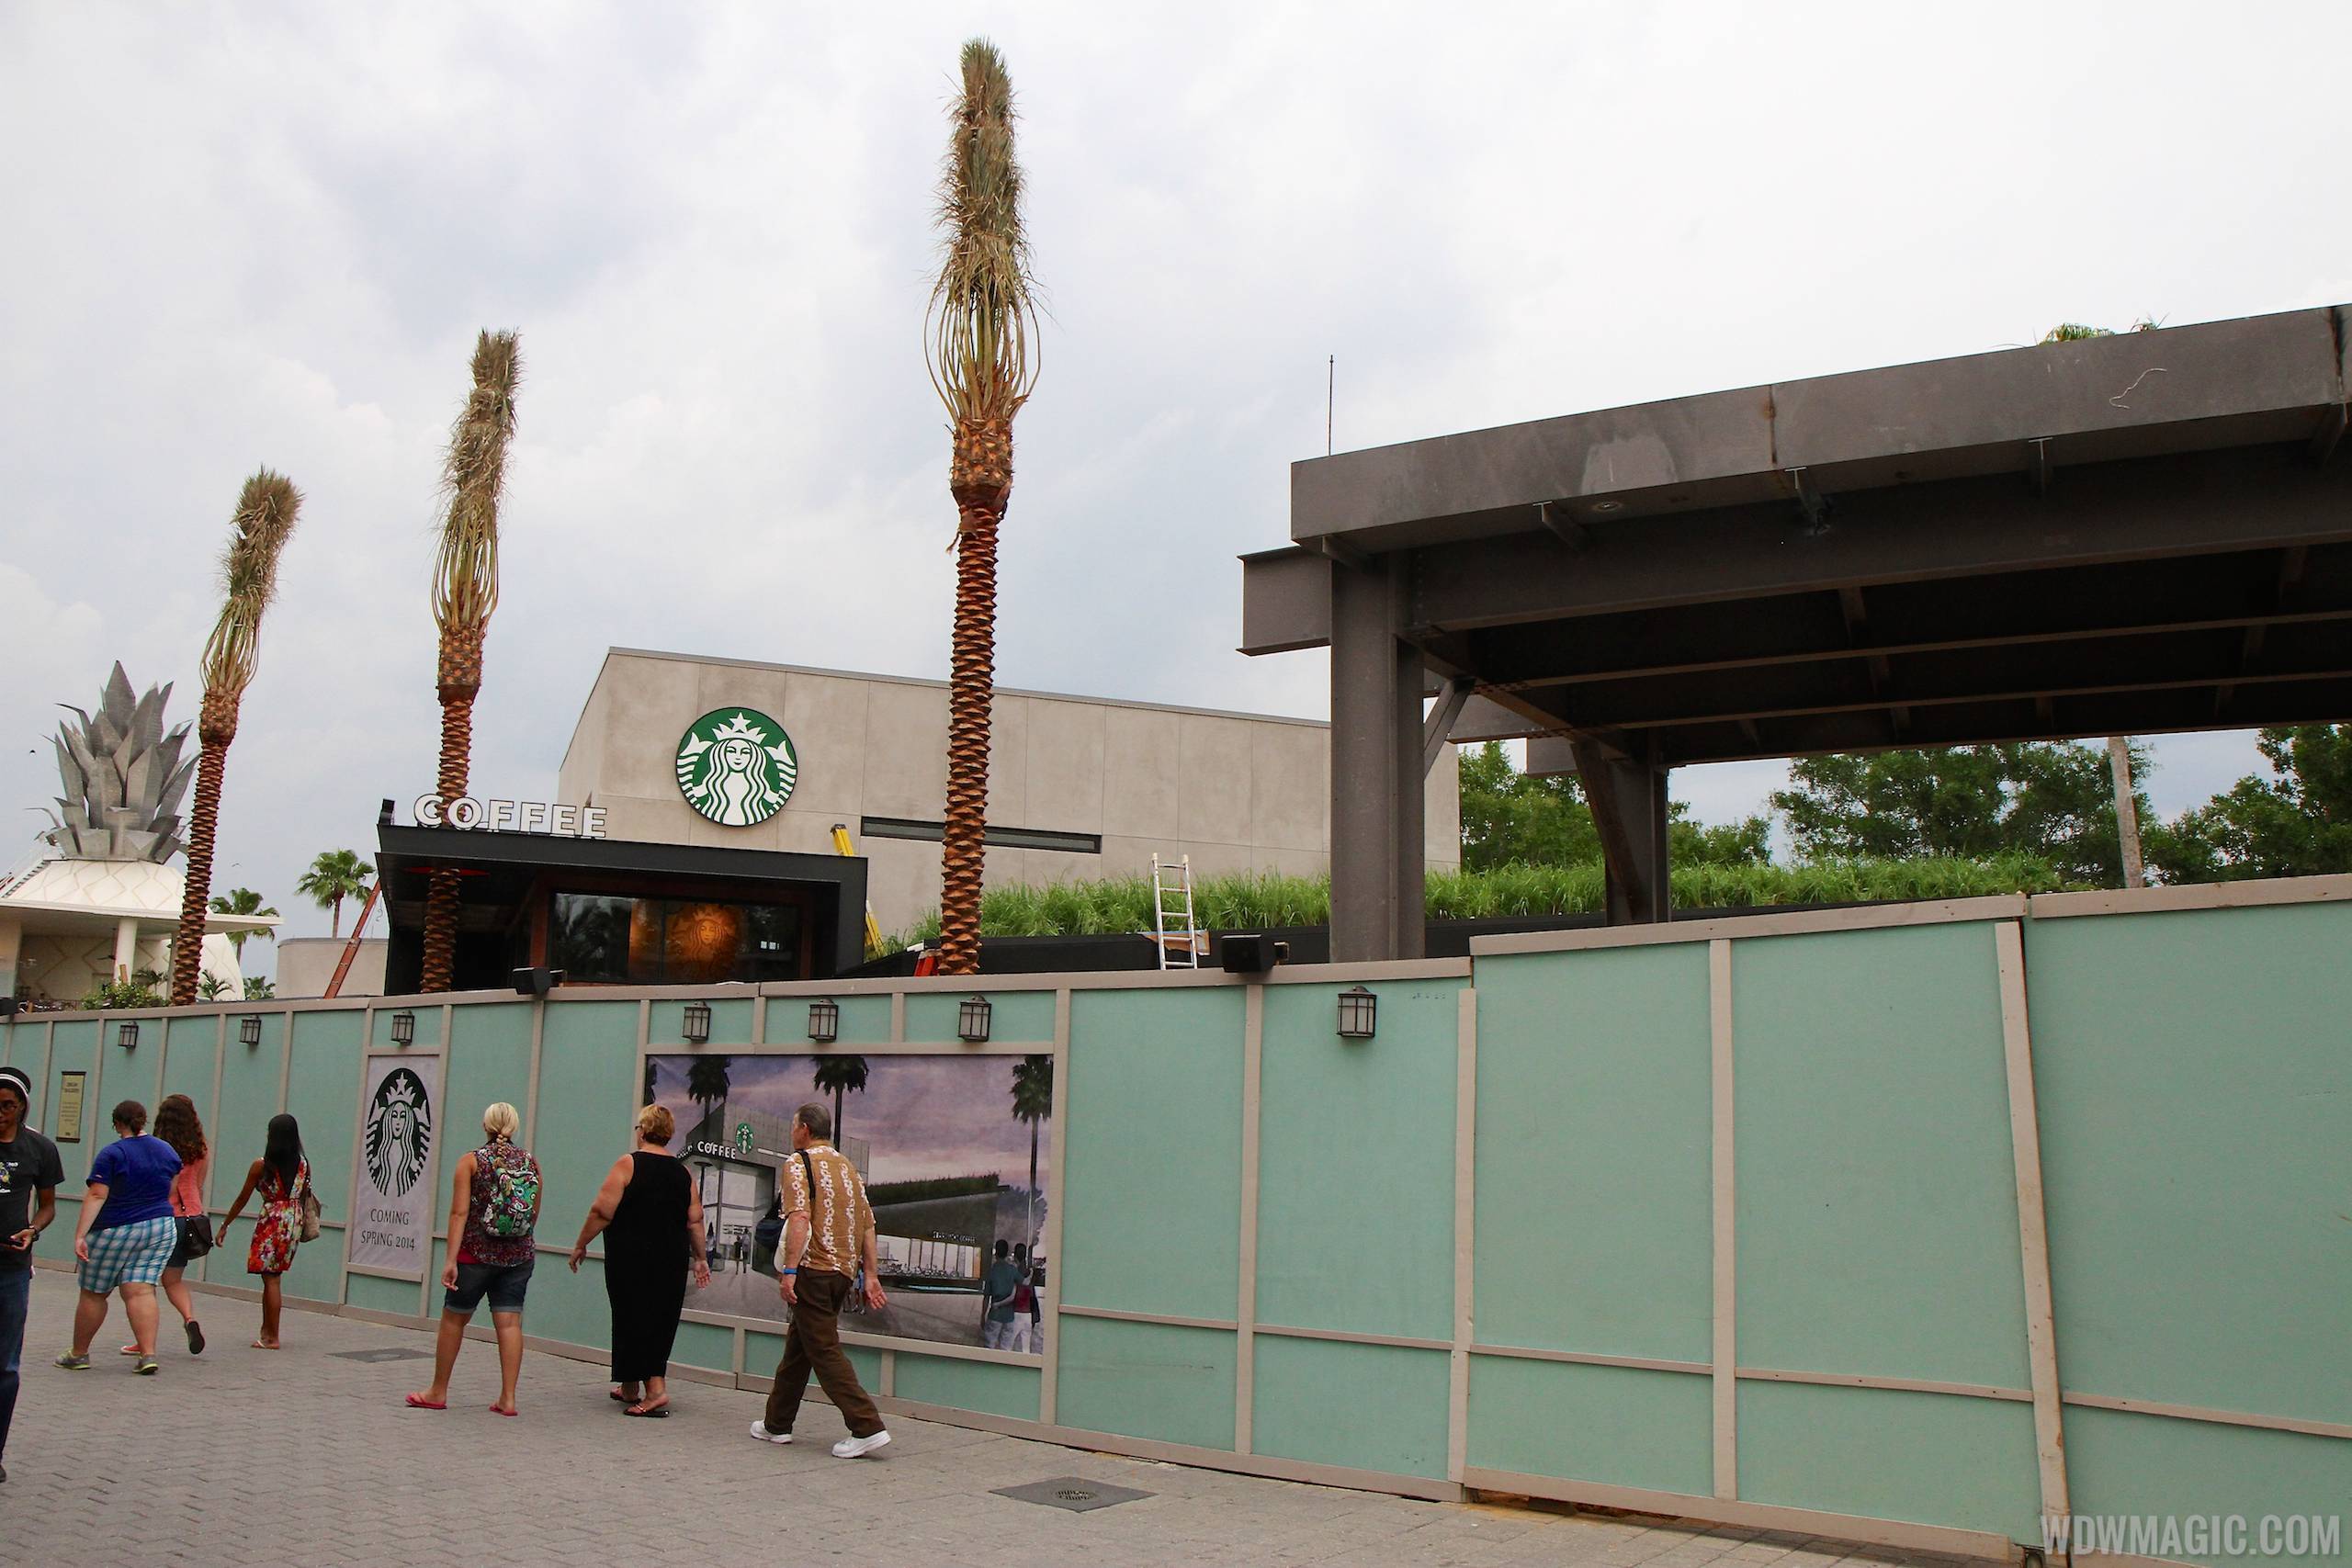 Starbucks West Side construction